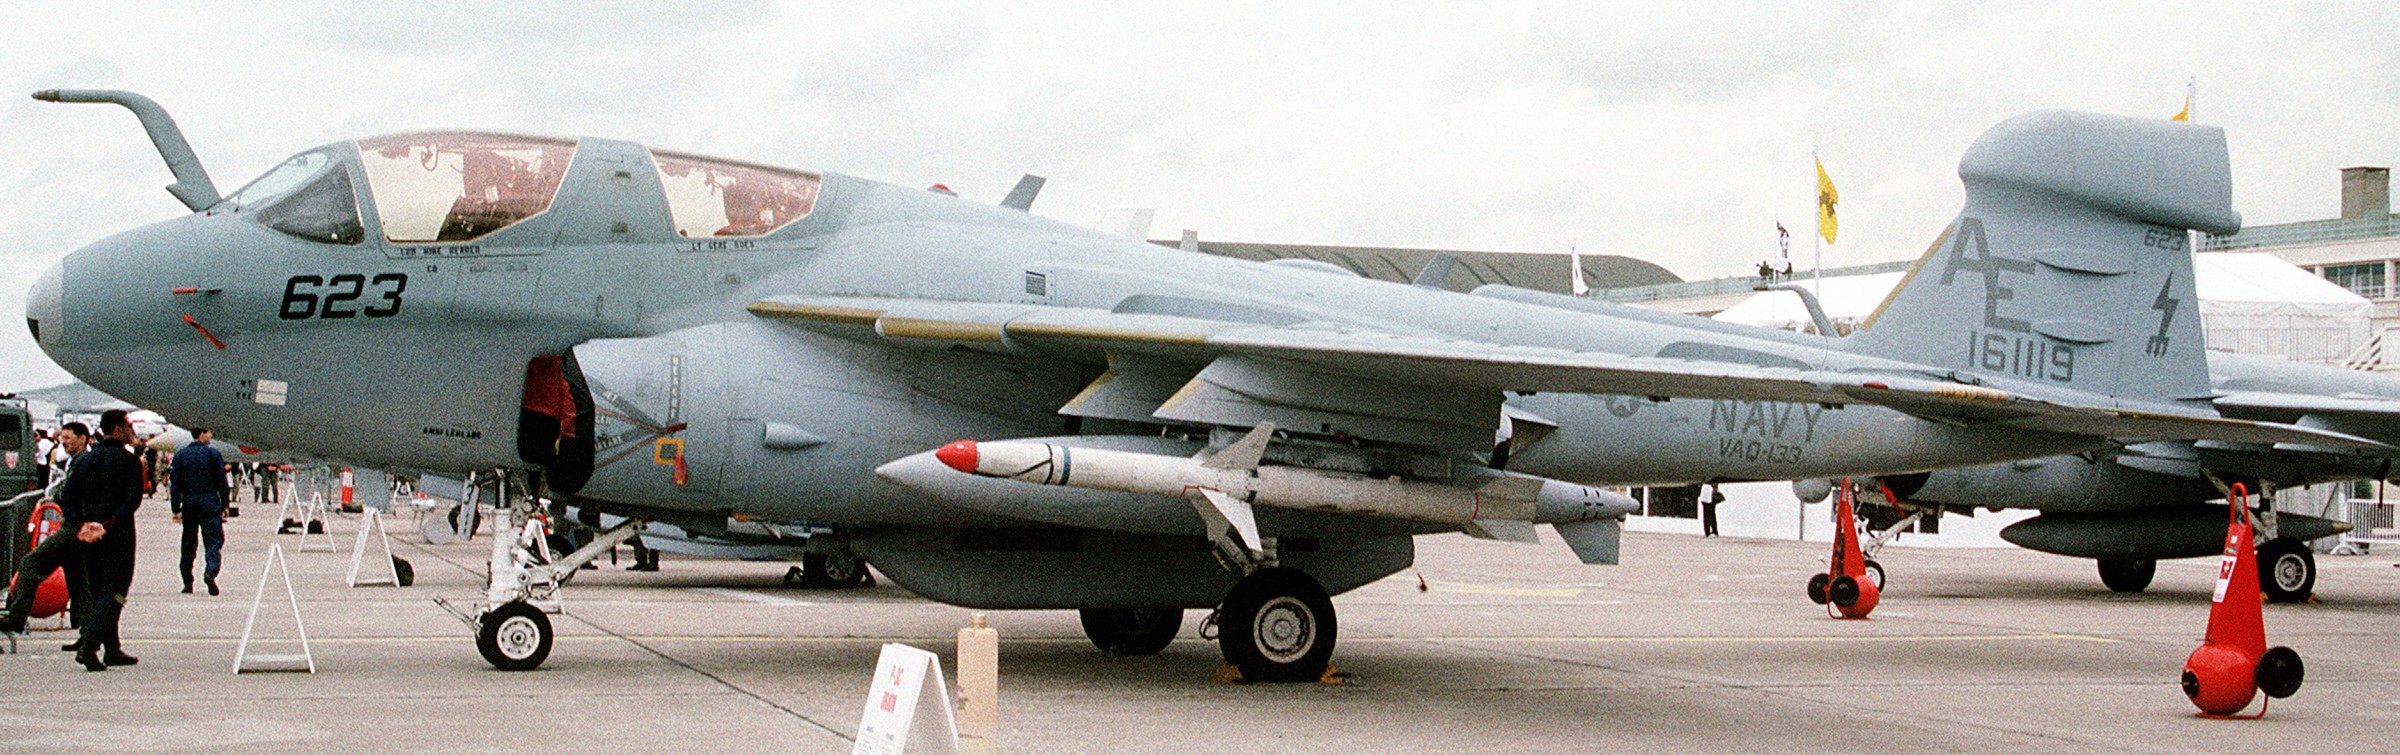 vaq-133 wizards tactical electronic warfare squadron tacelron us navy grumman ea-6b prowler paris air show 1991